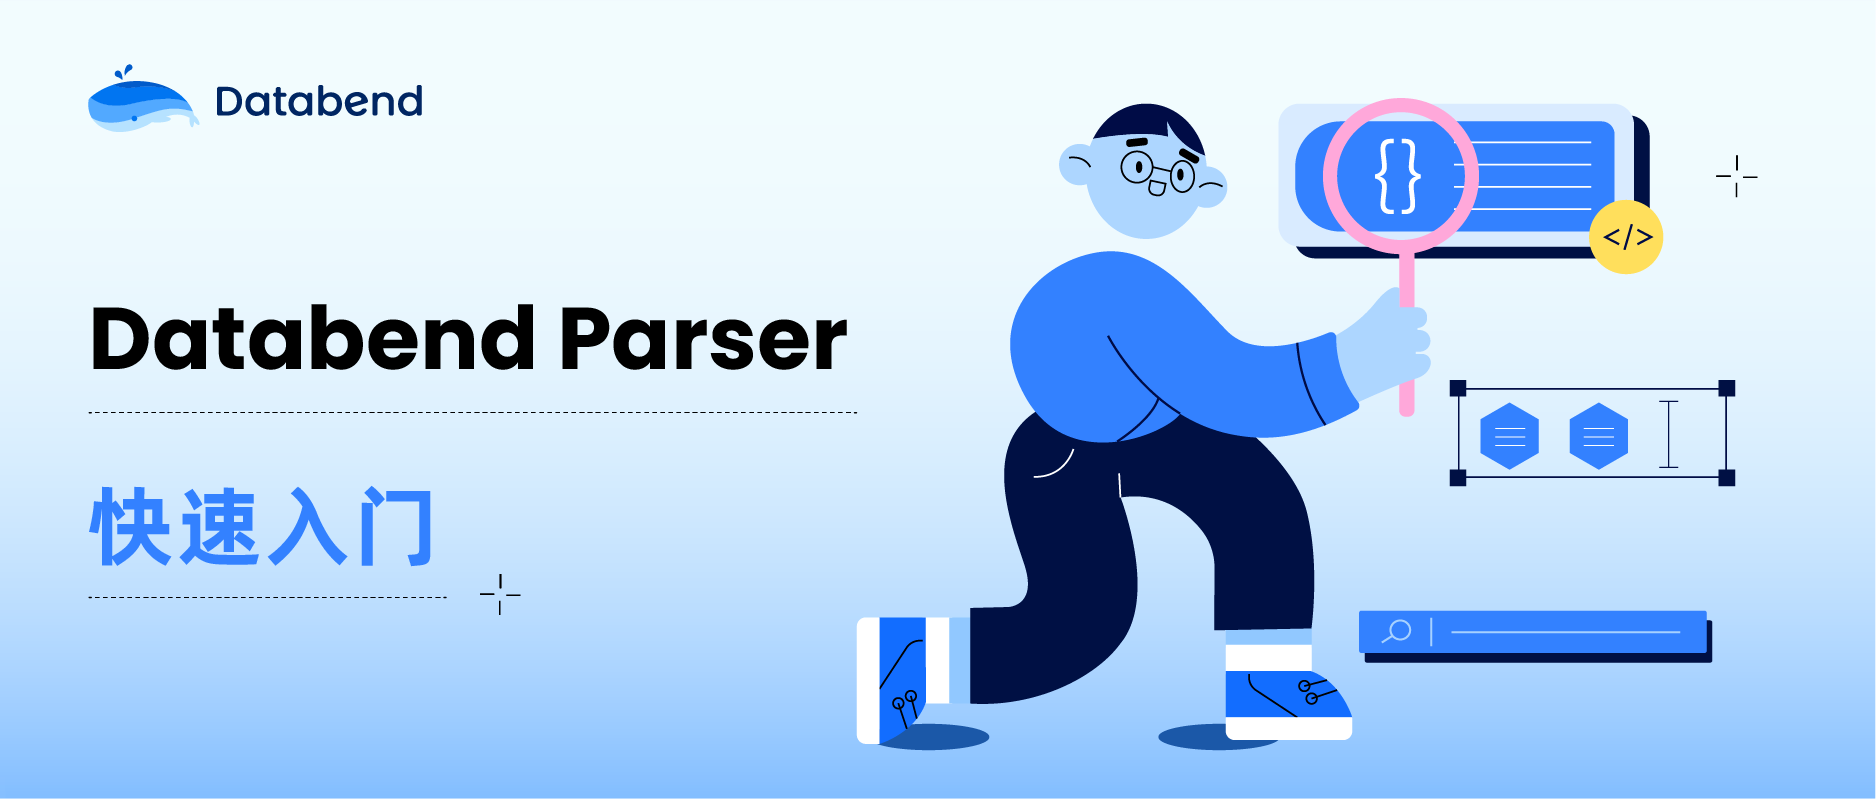 Databend Parser 快速入门